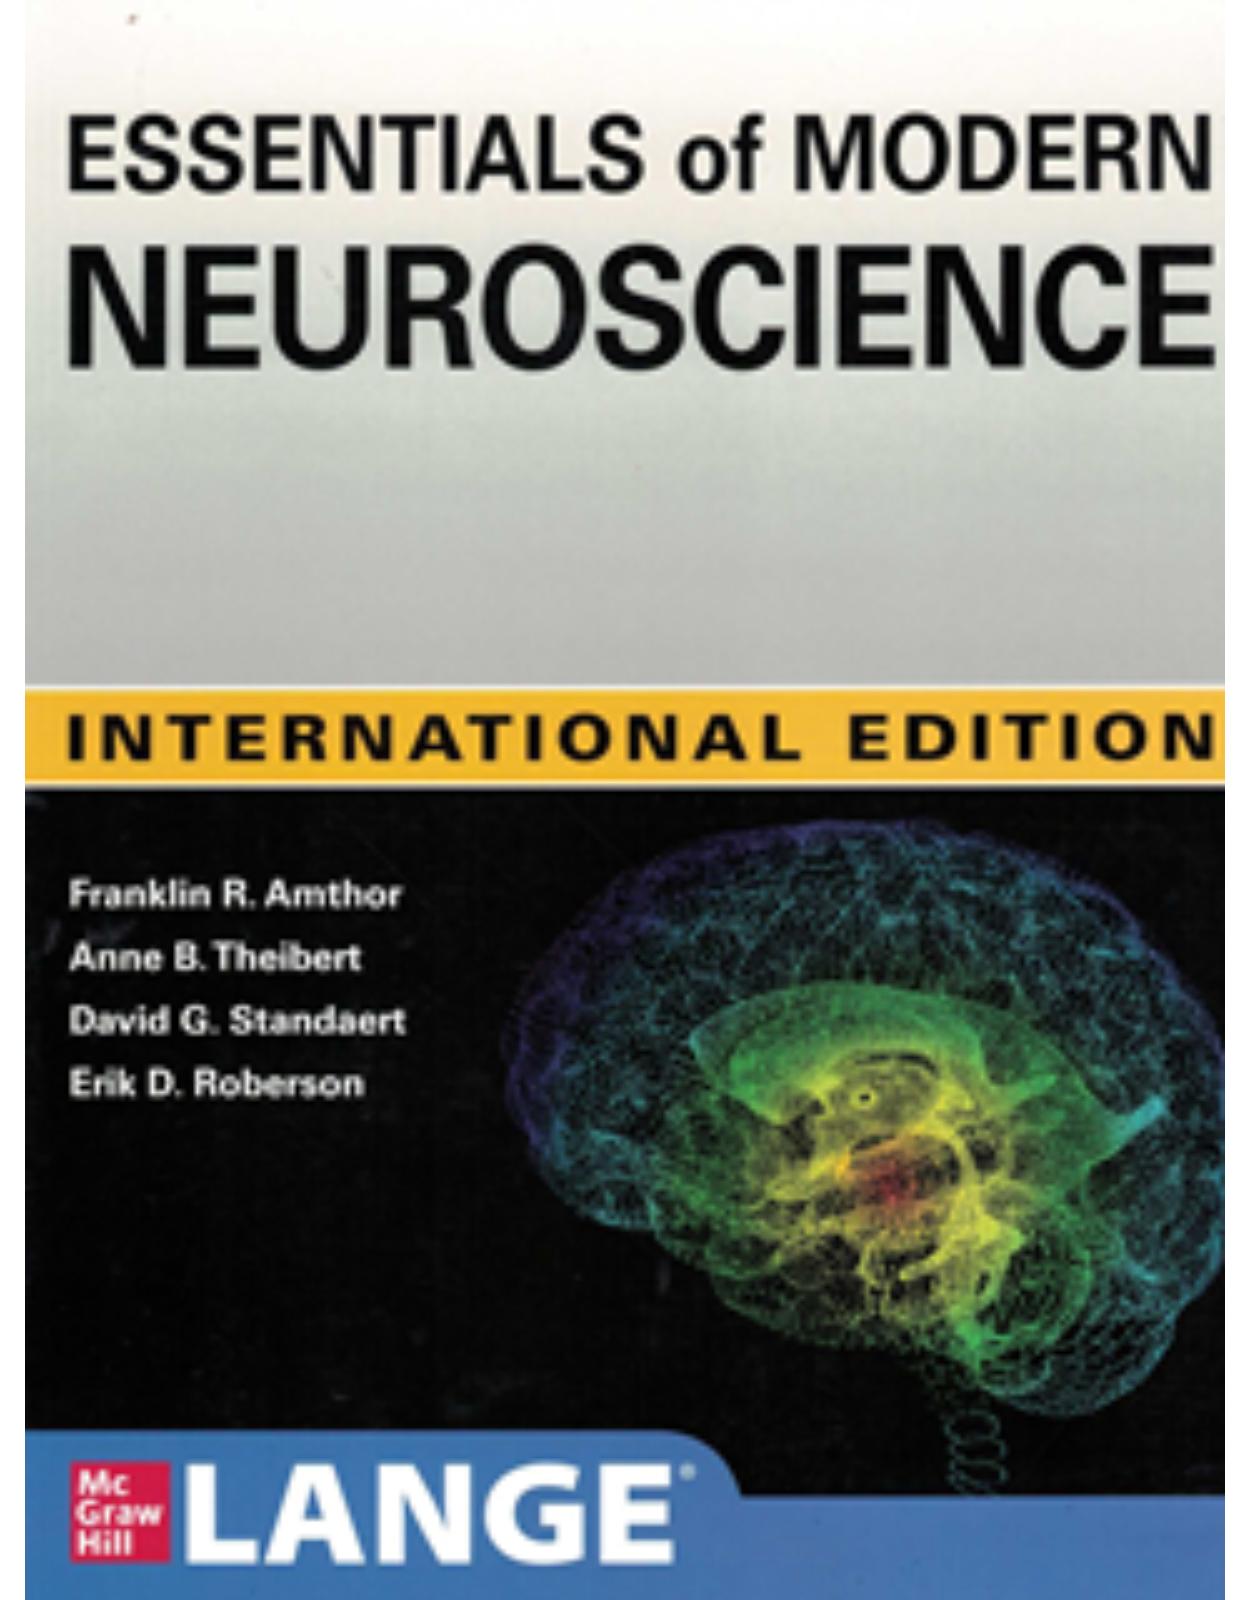 Essentials of Modern Neuroscience